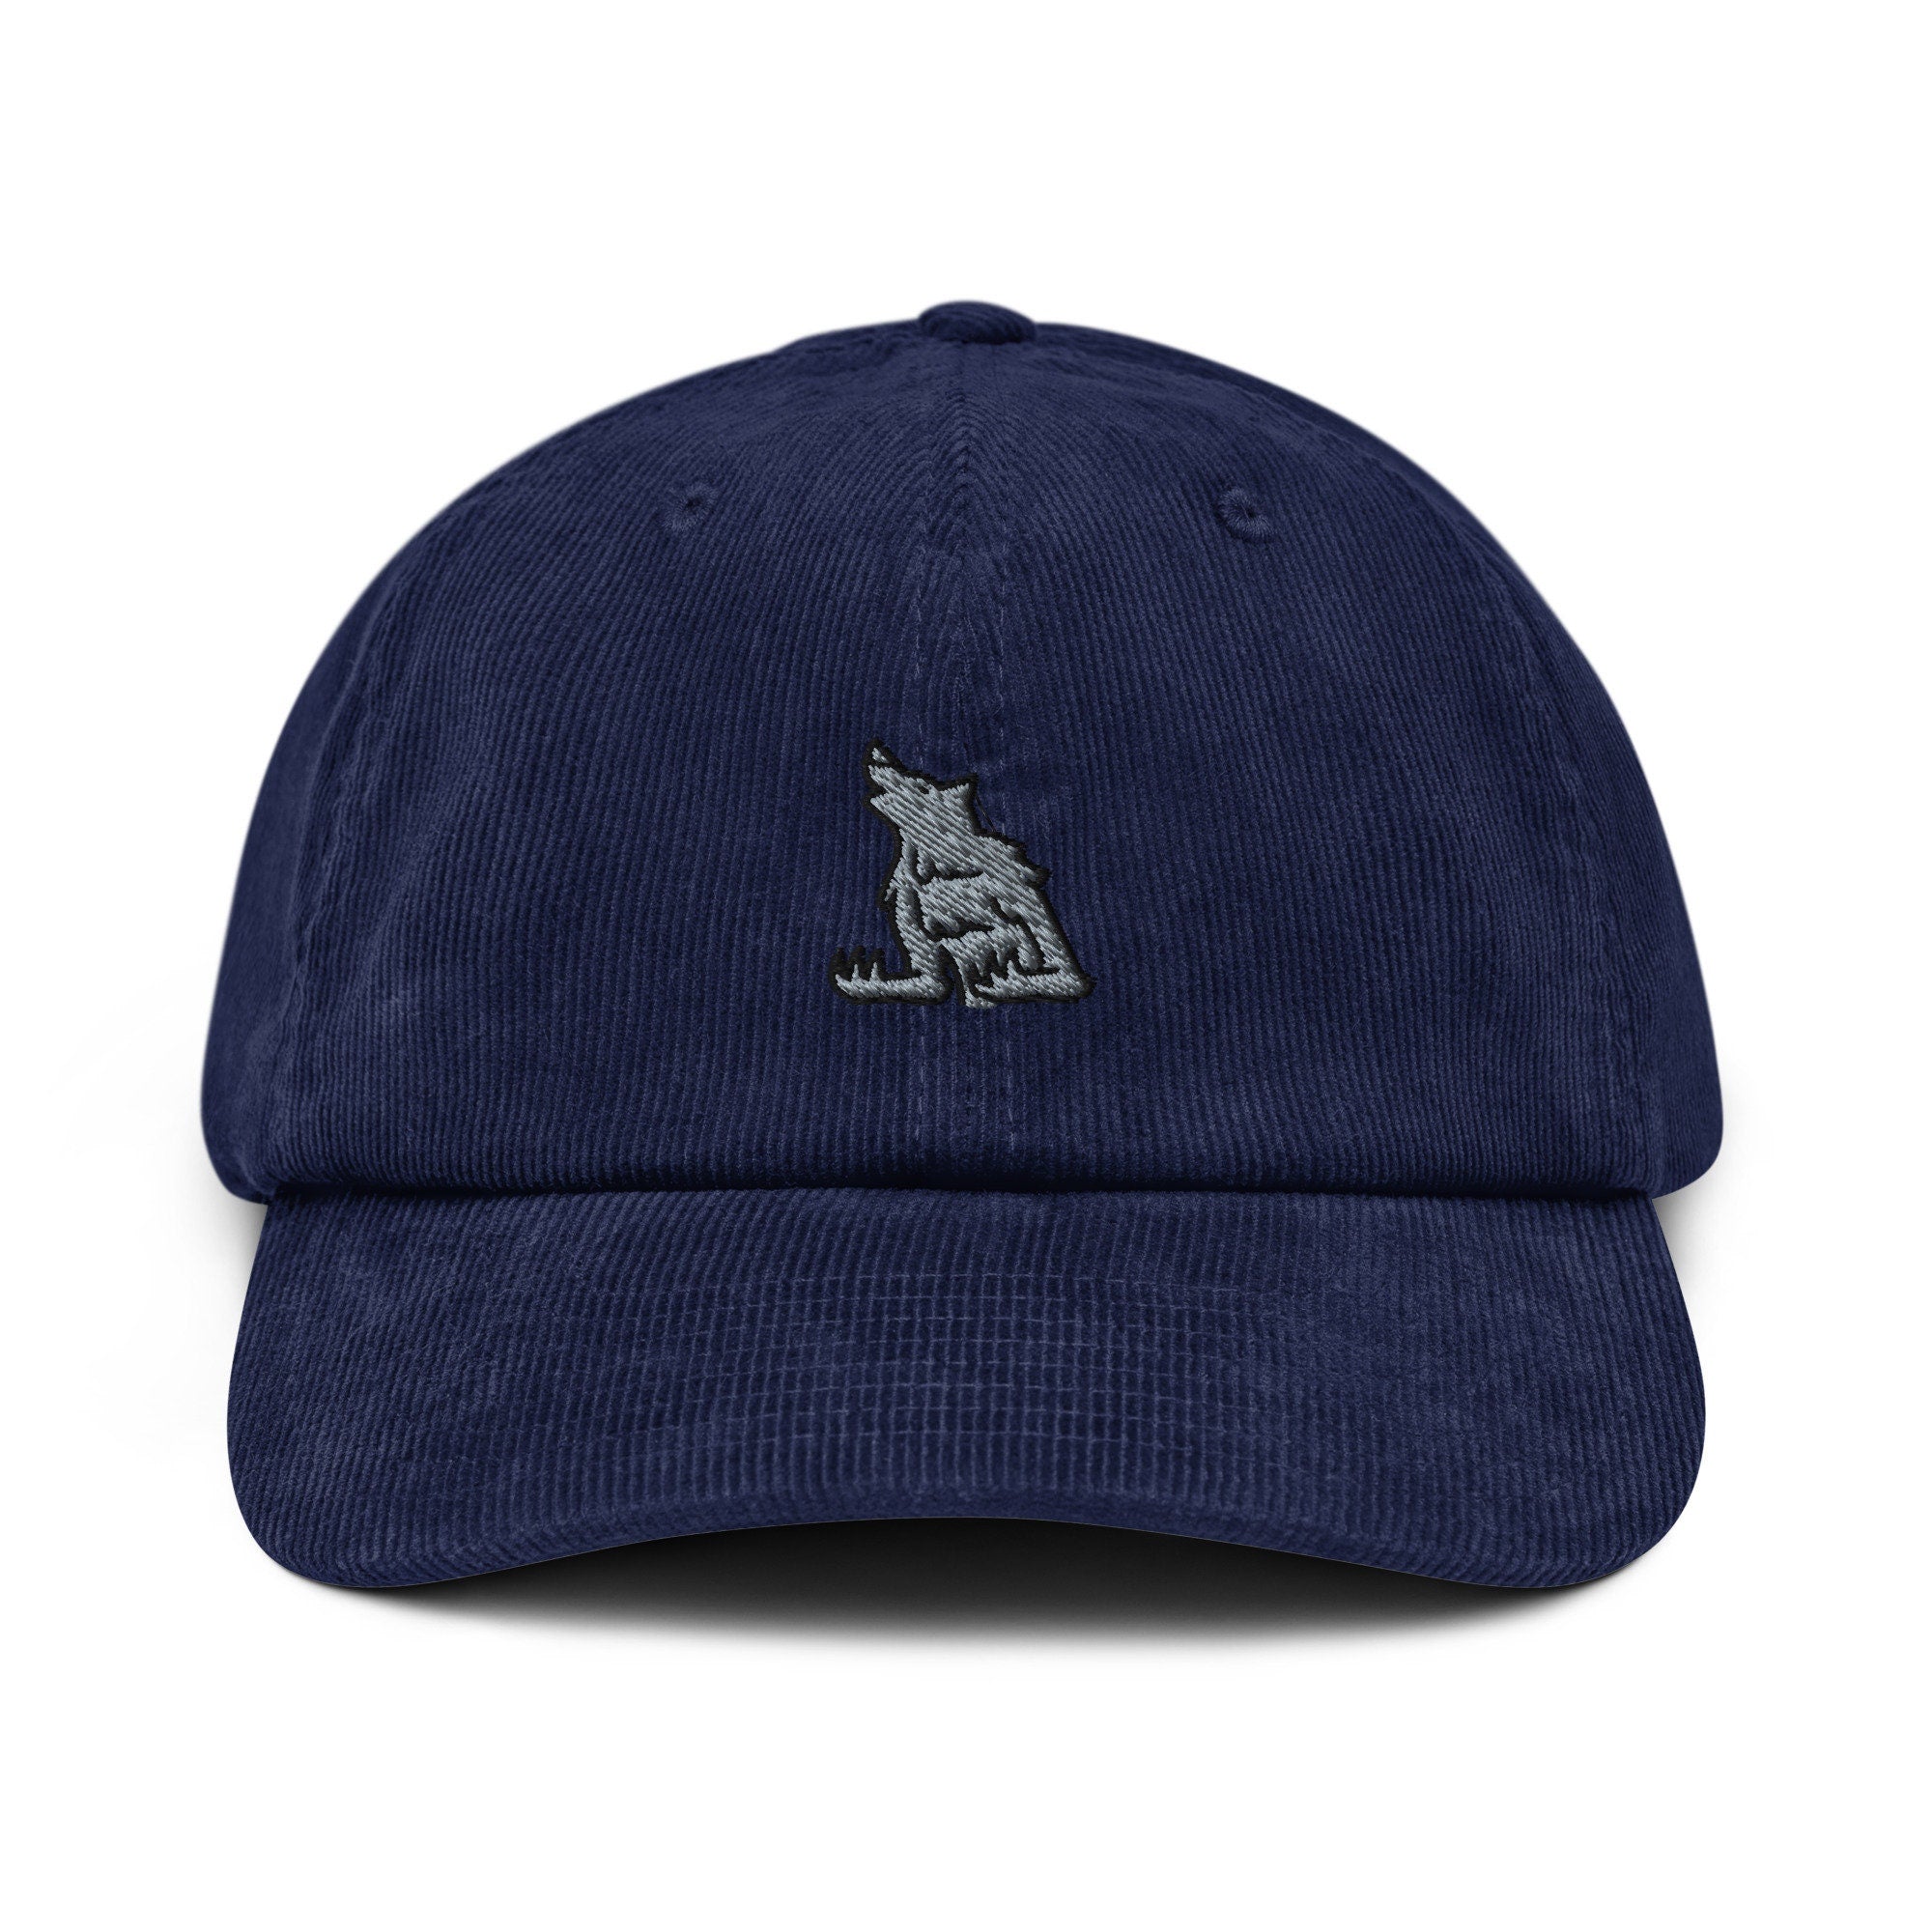 Werewolf Corduroy Hat, Handmade Embroidered Corduroy Dad Cap - Multiple Colors